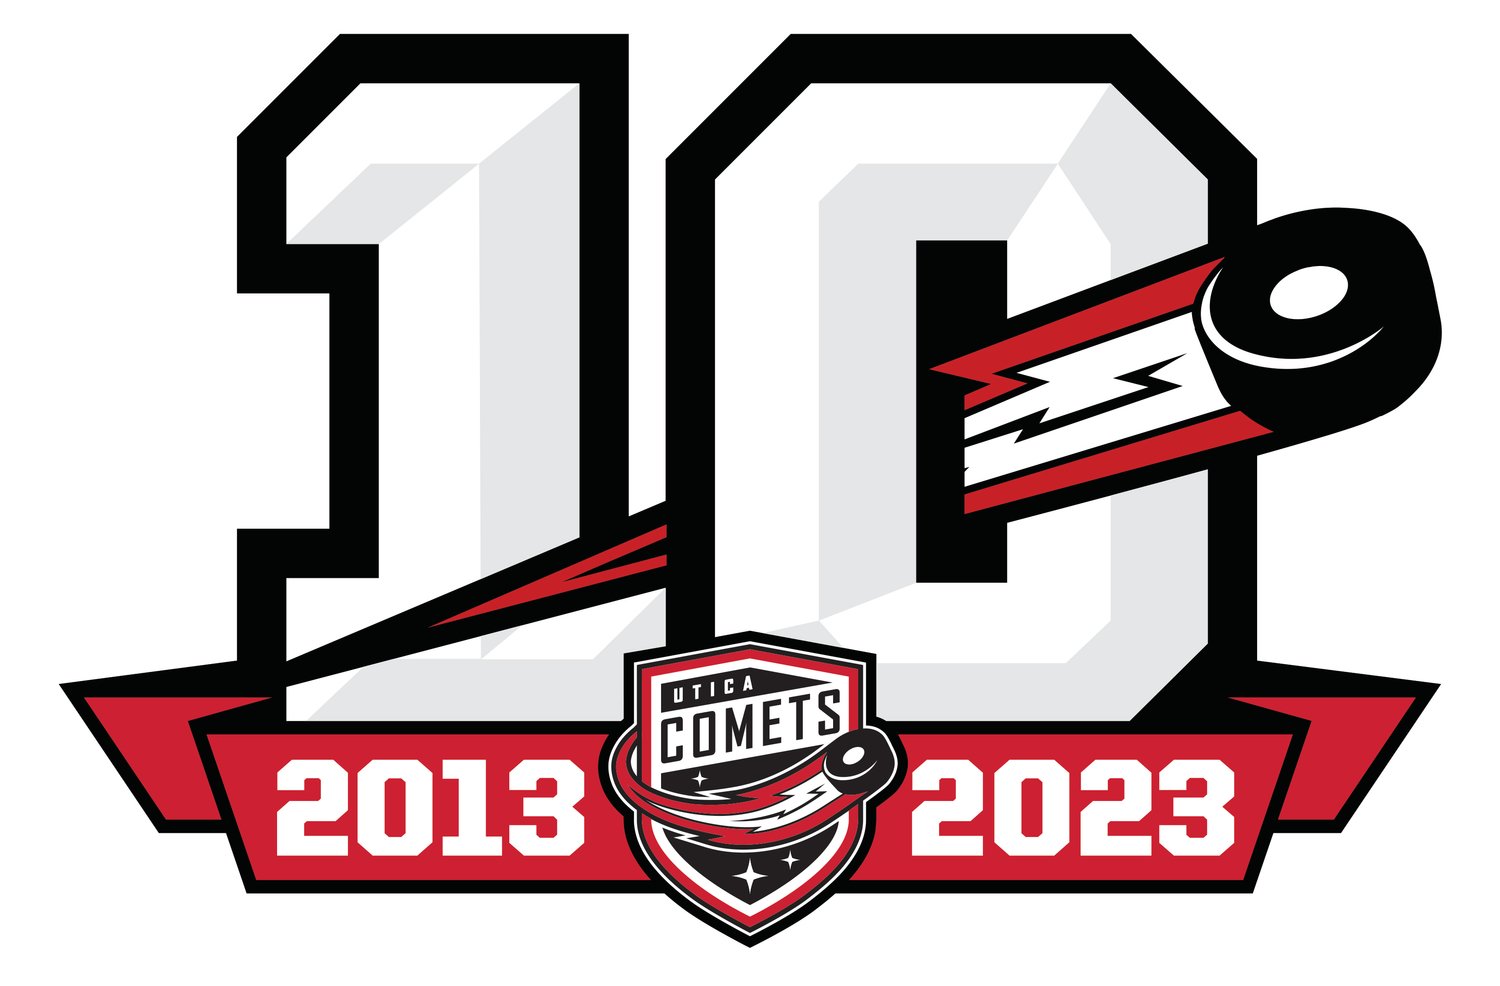 Utica Comets' 10th season logo